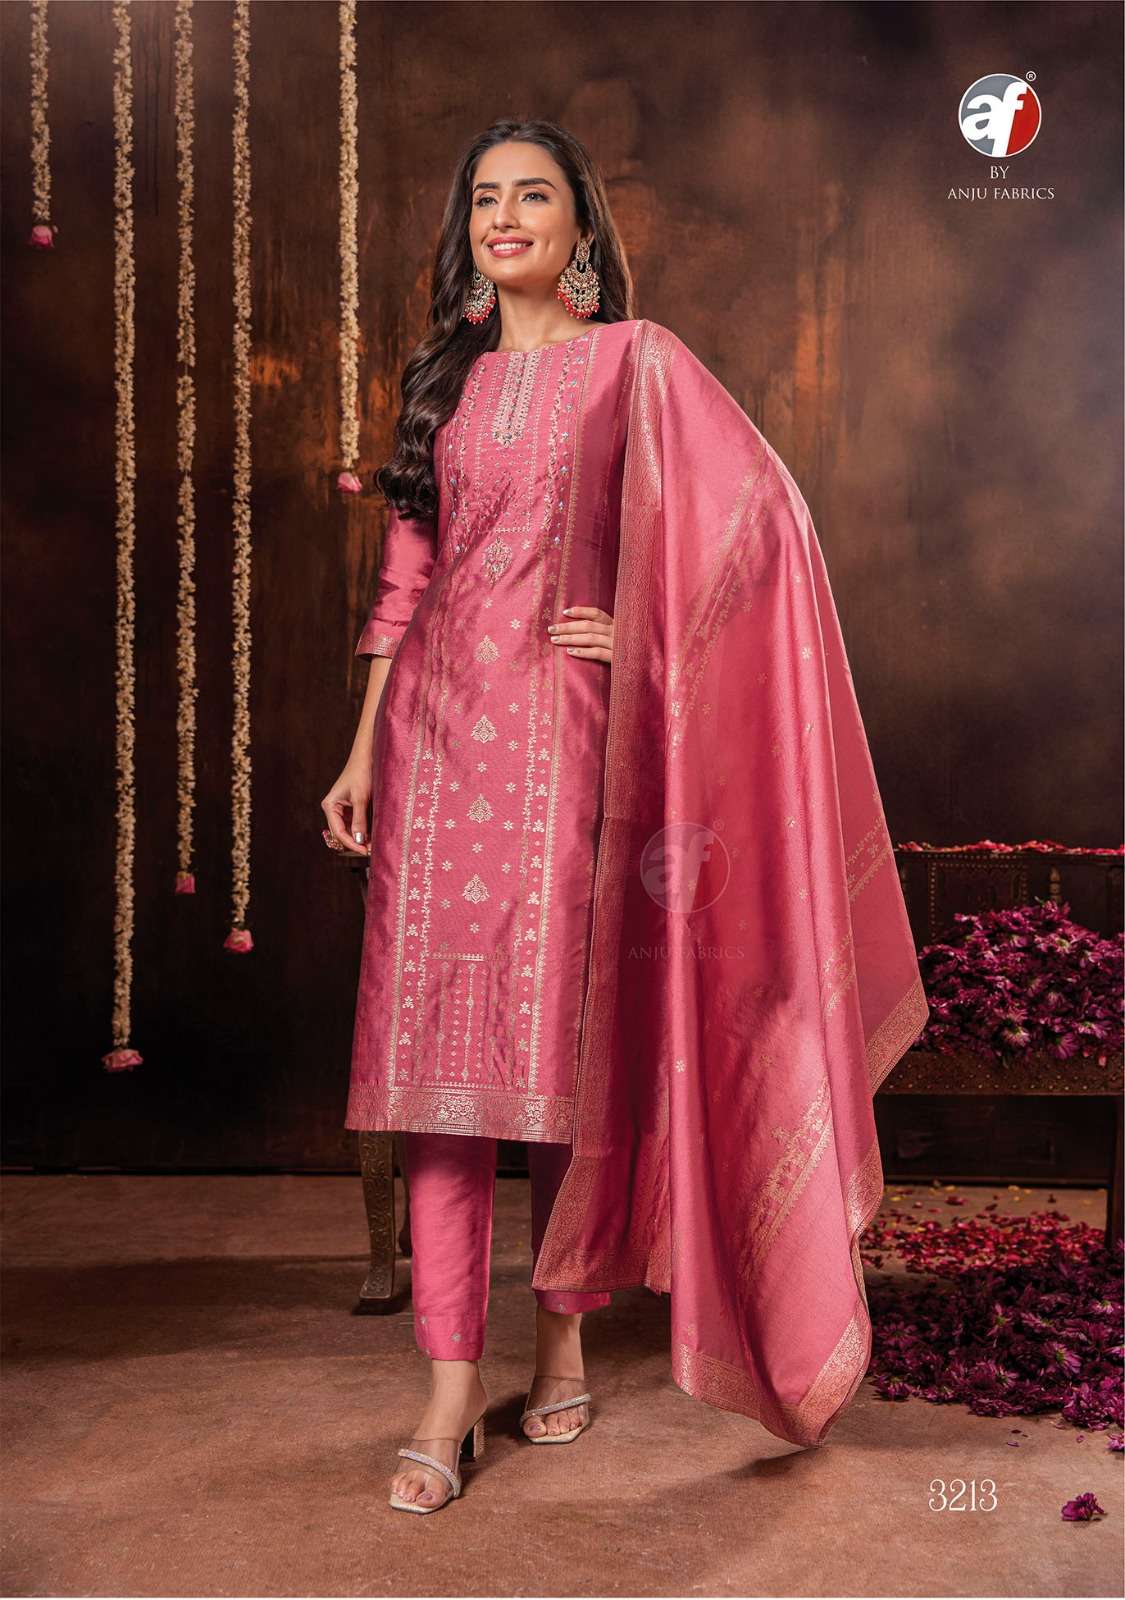 Anju Fabrics Silk Affair Vol -2 Kurti Wholesale catalog